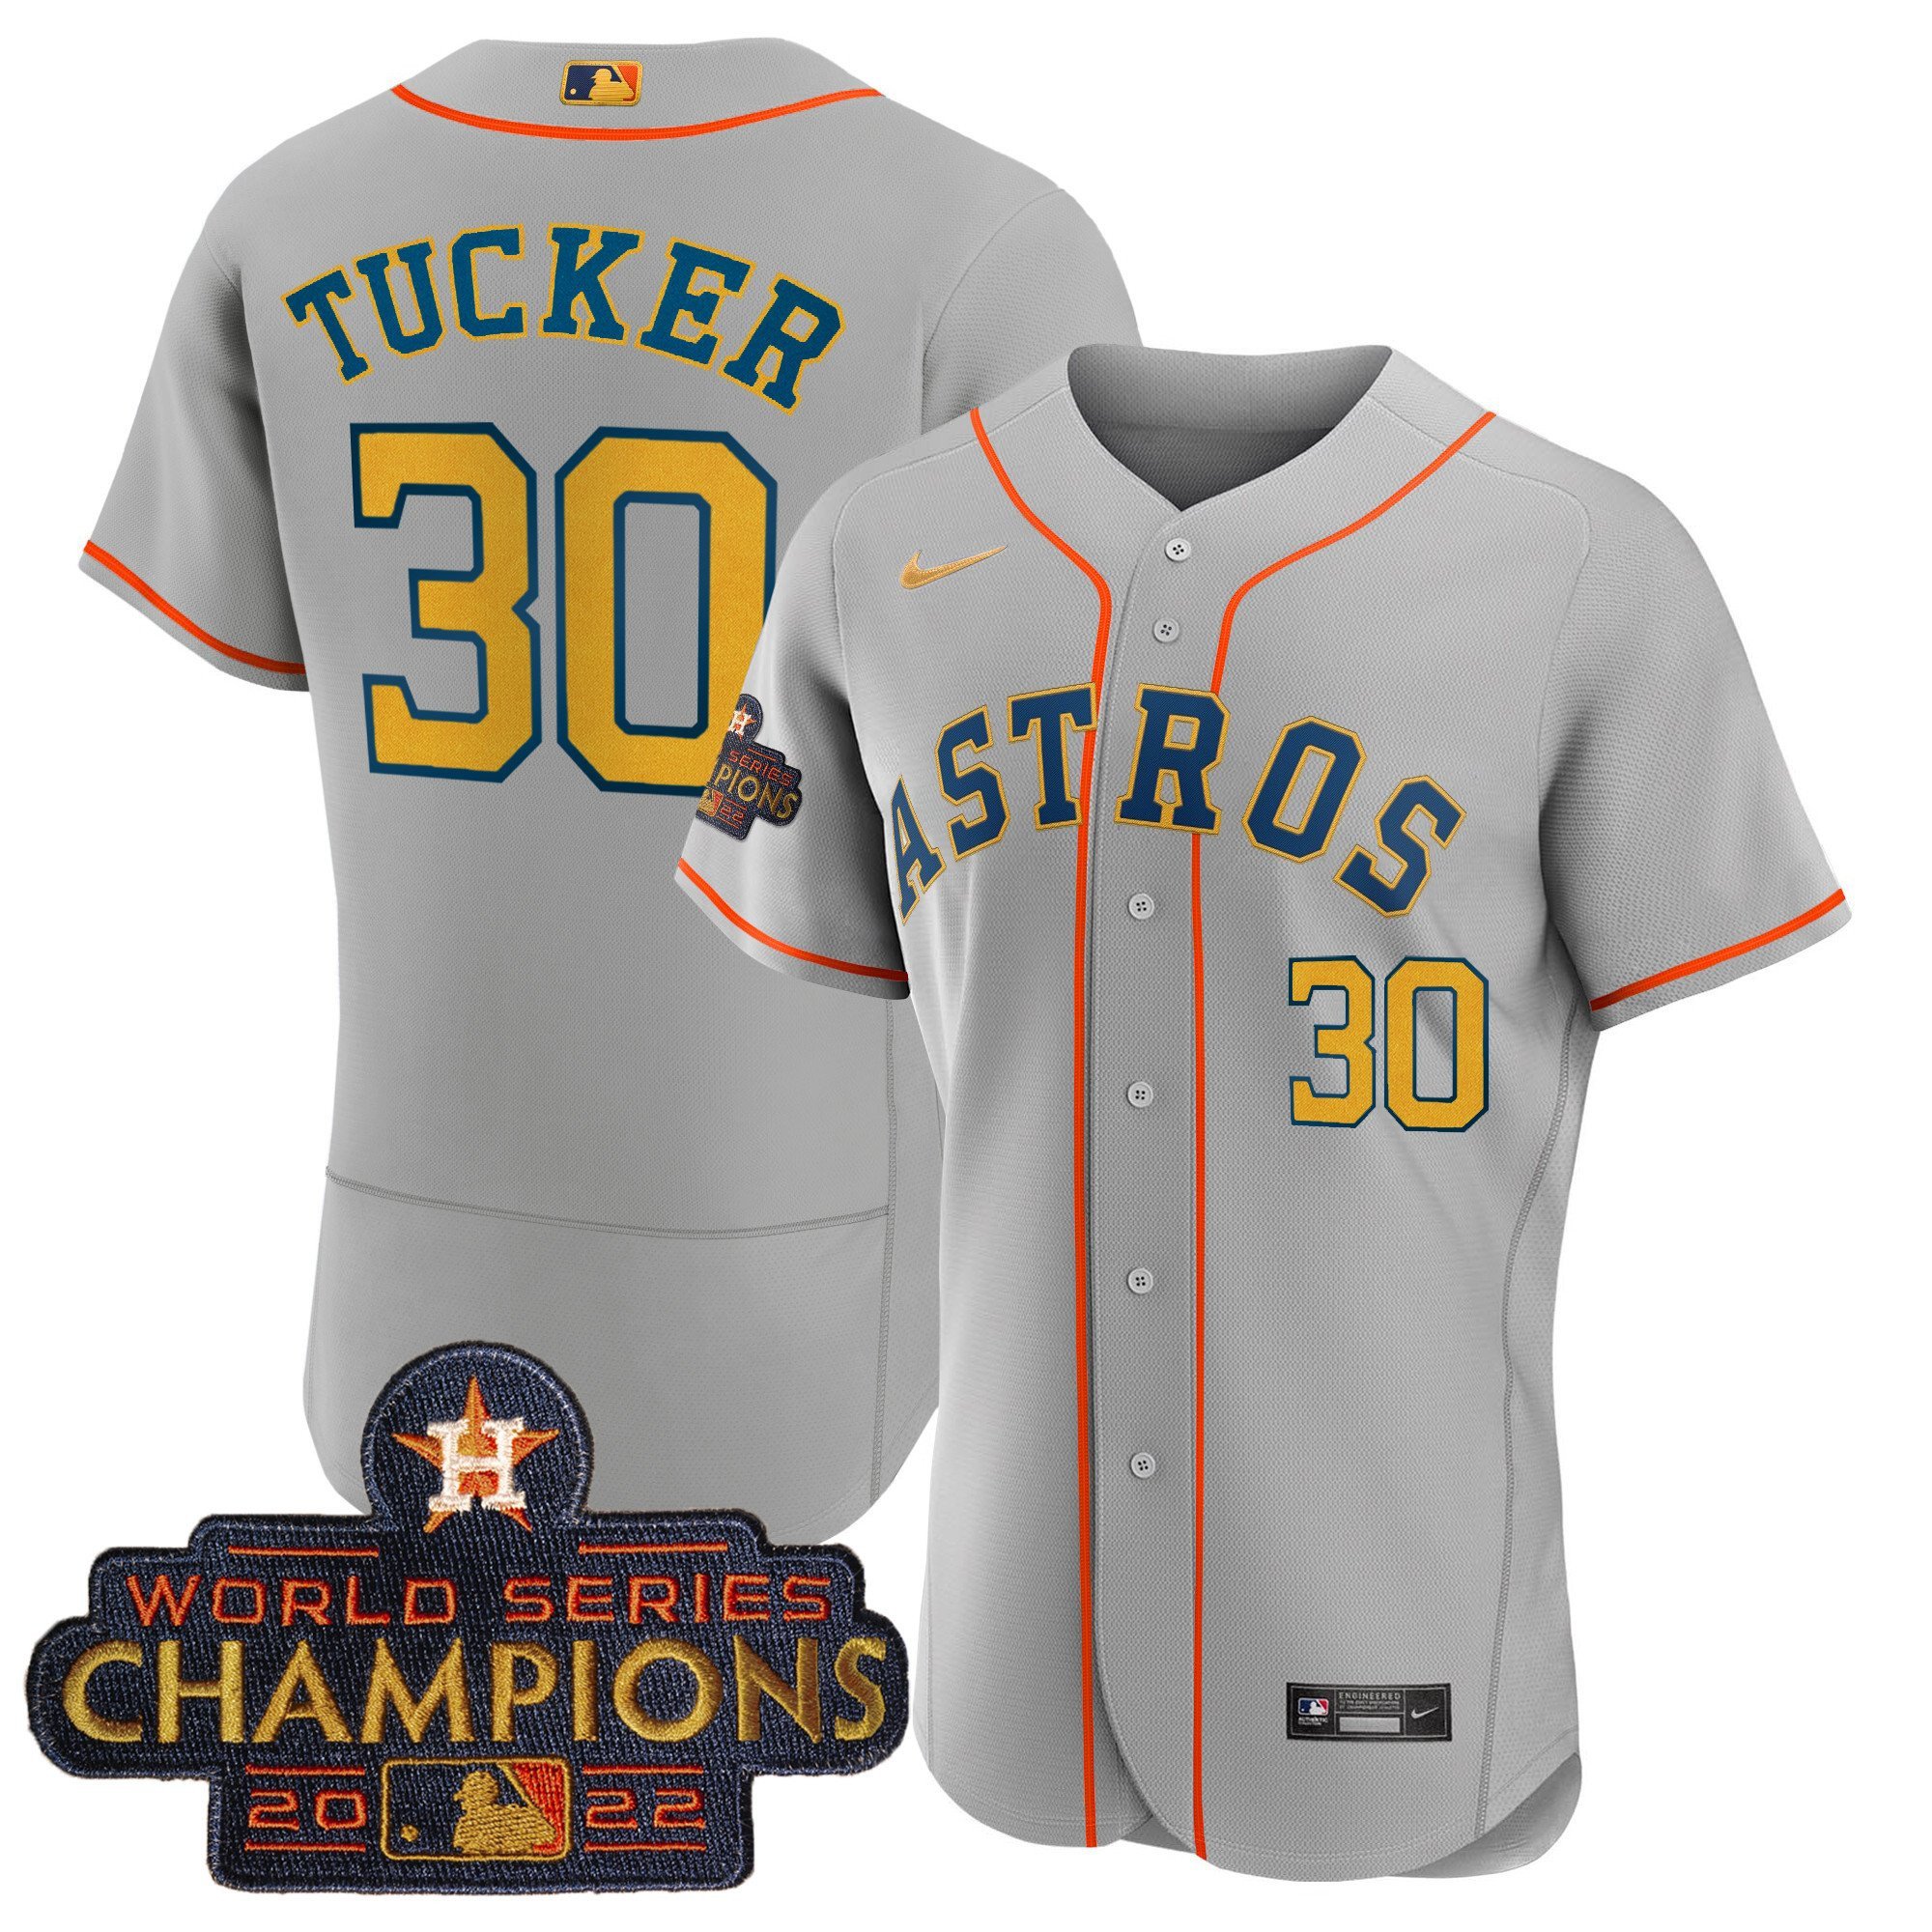 Astros 2023 World Series Orange Gold Jersey - All Stitched - Vgear